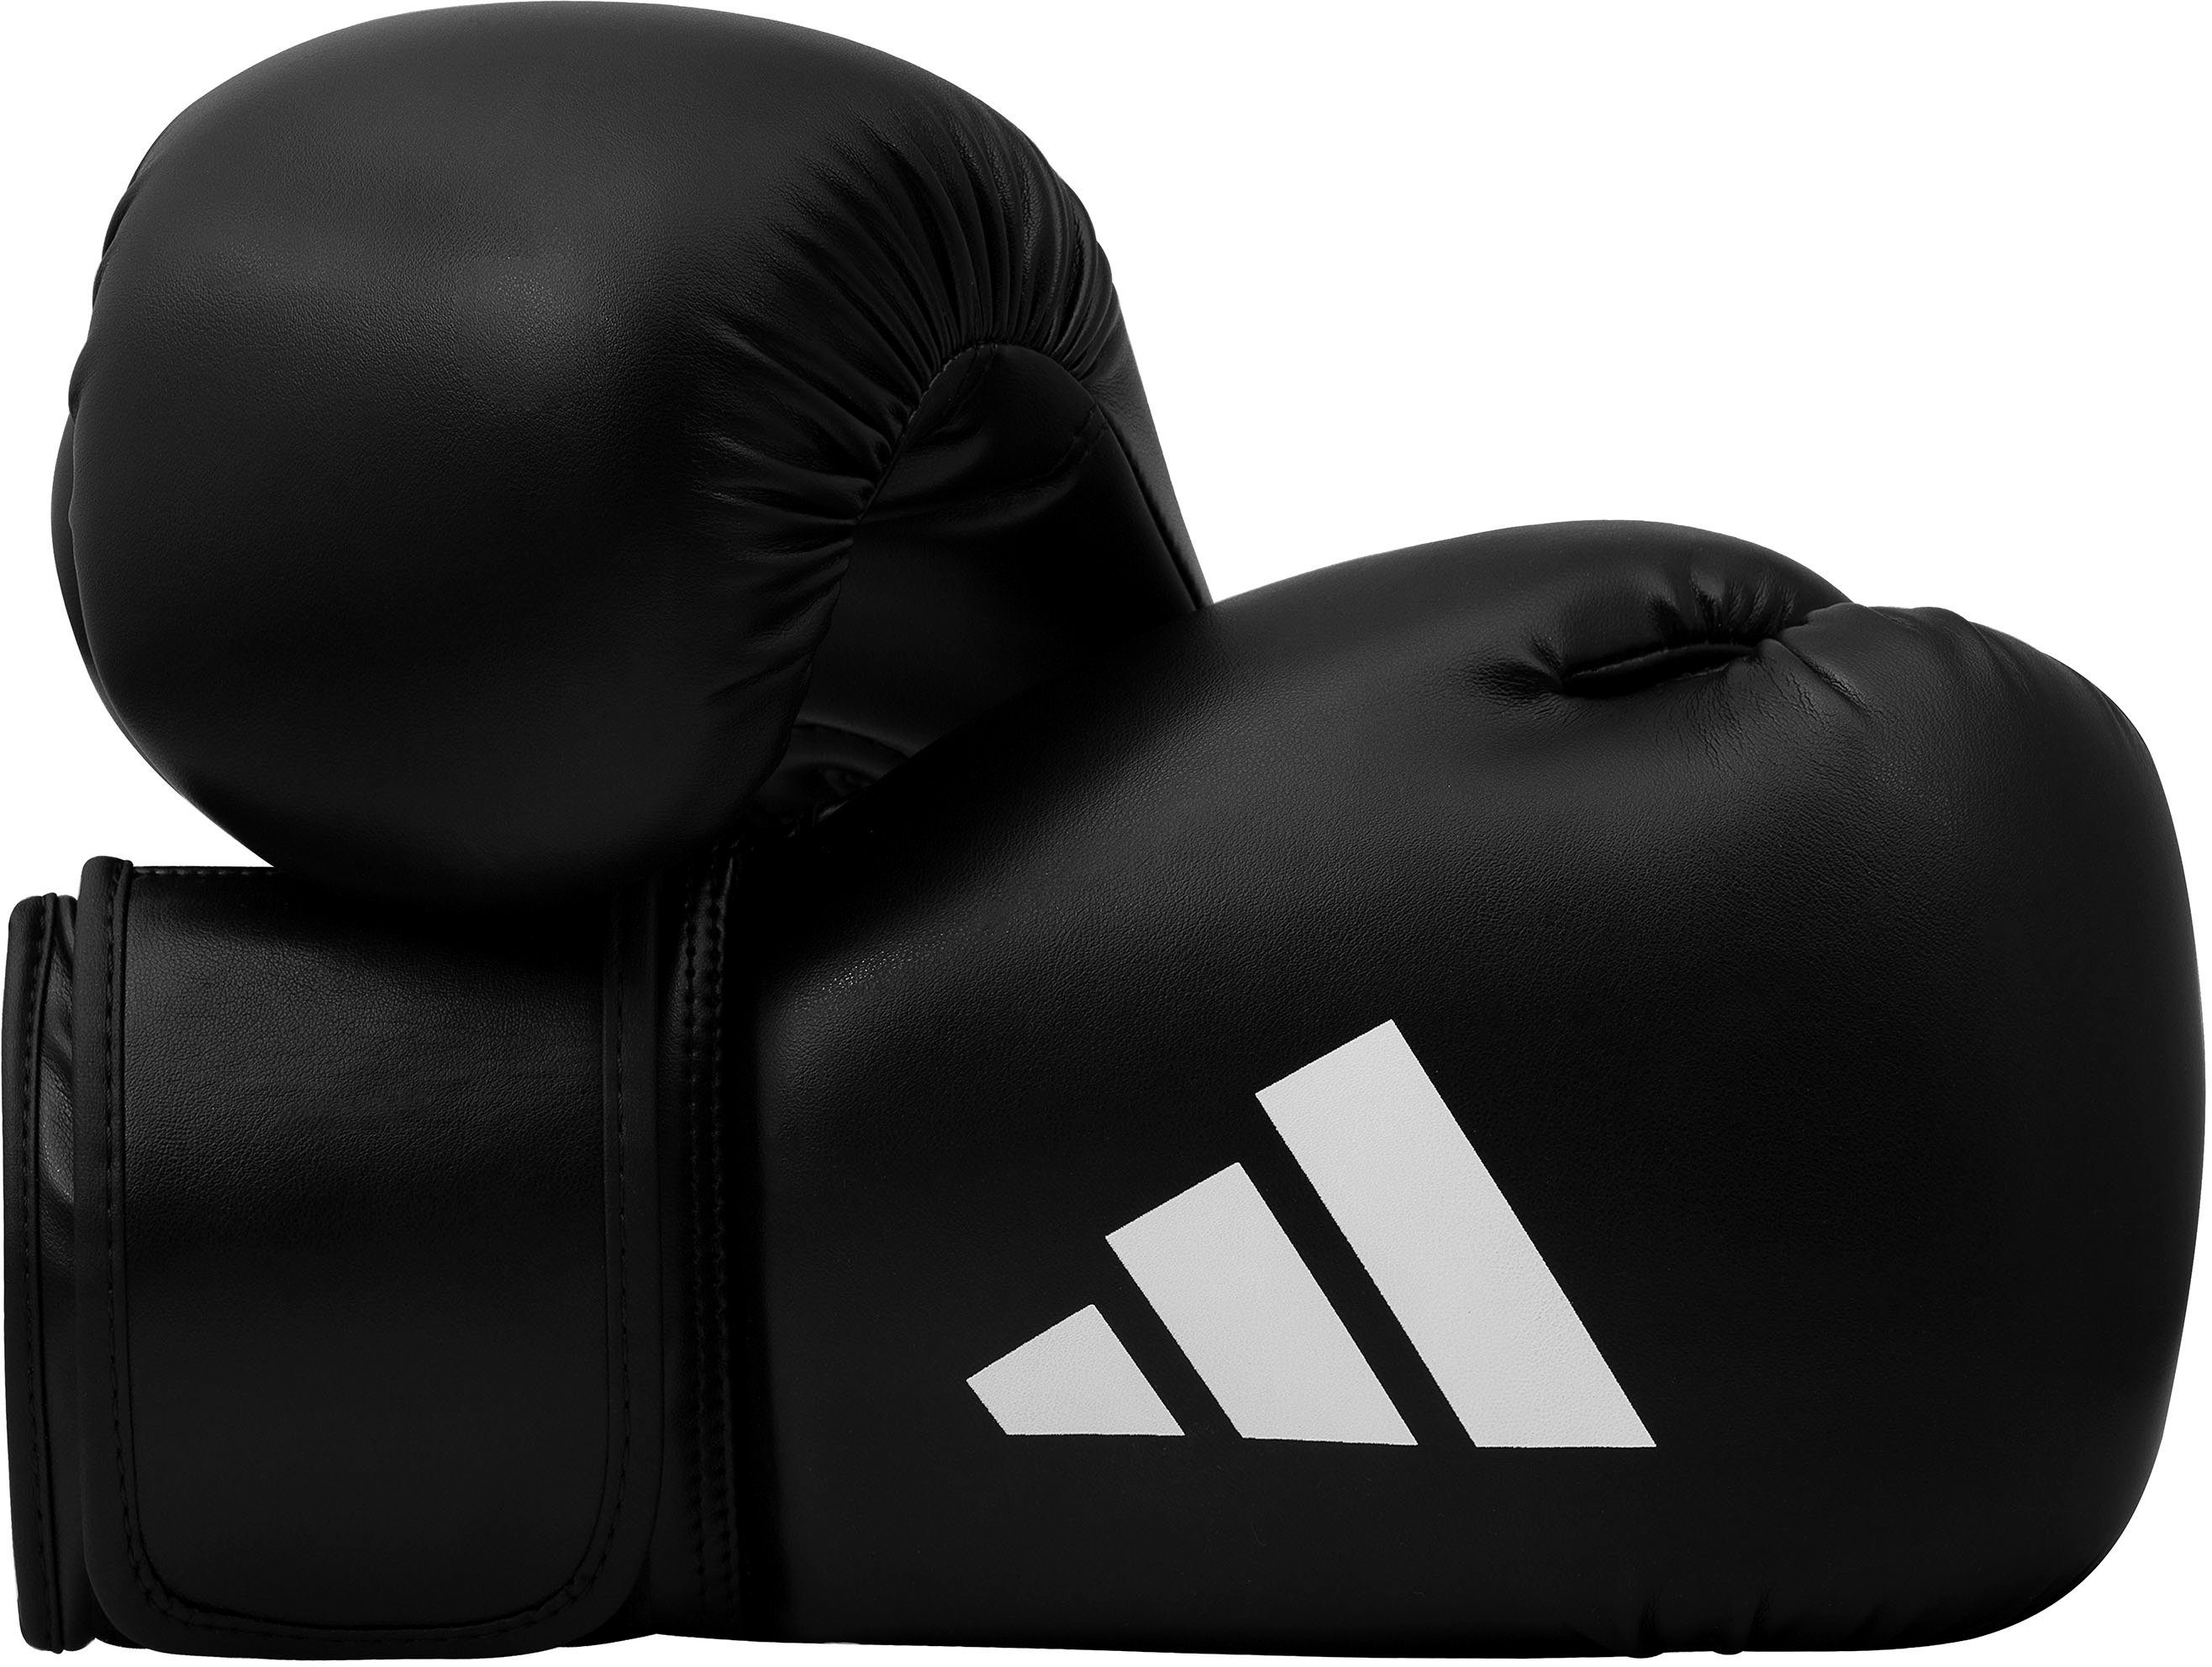 Boxsack Youth adidas Performance Boxhandschuhen) Set (Set, mit Boxing